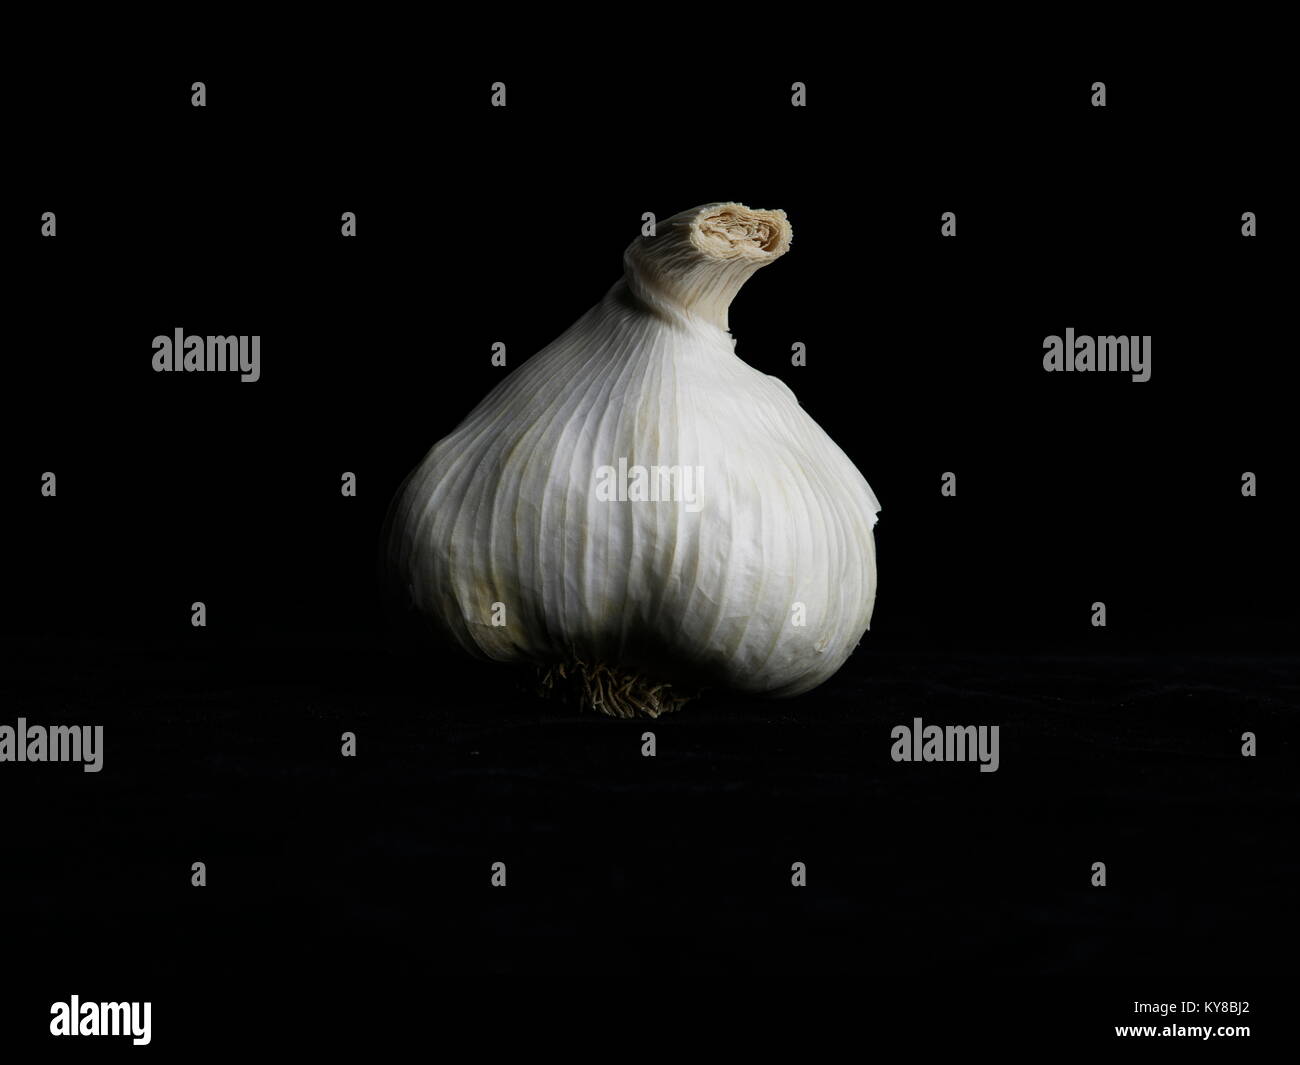 Garlic Bulb on Black Background - high resolution close up Stock Photo